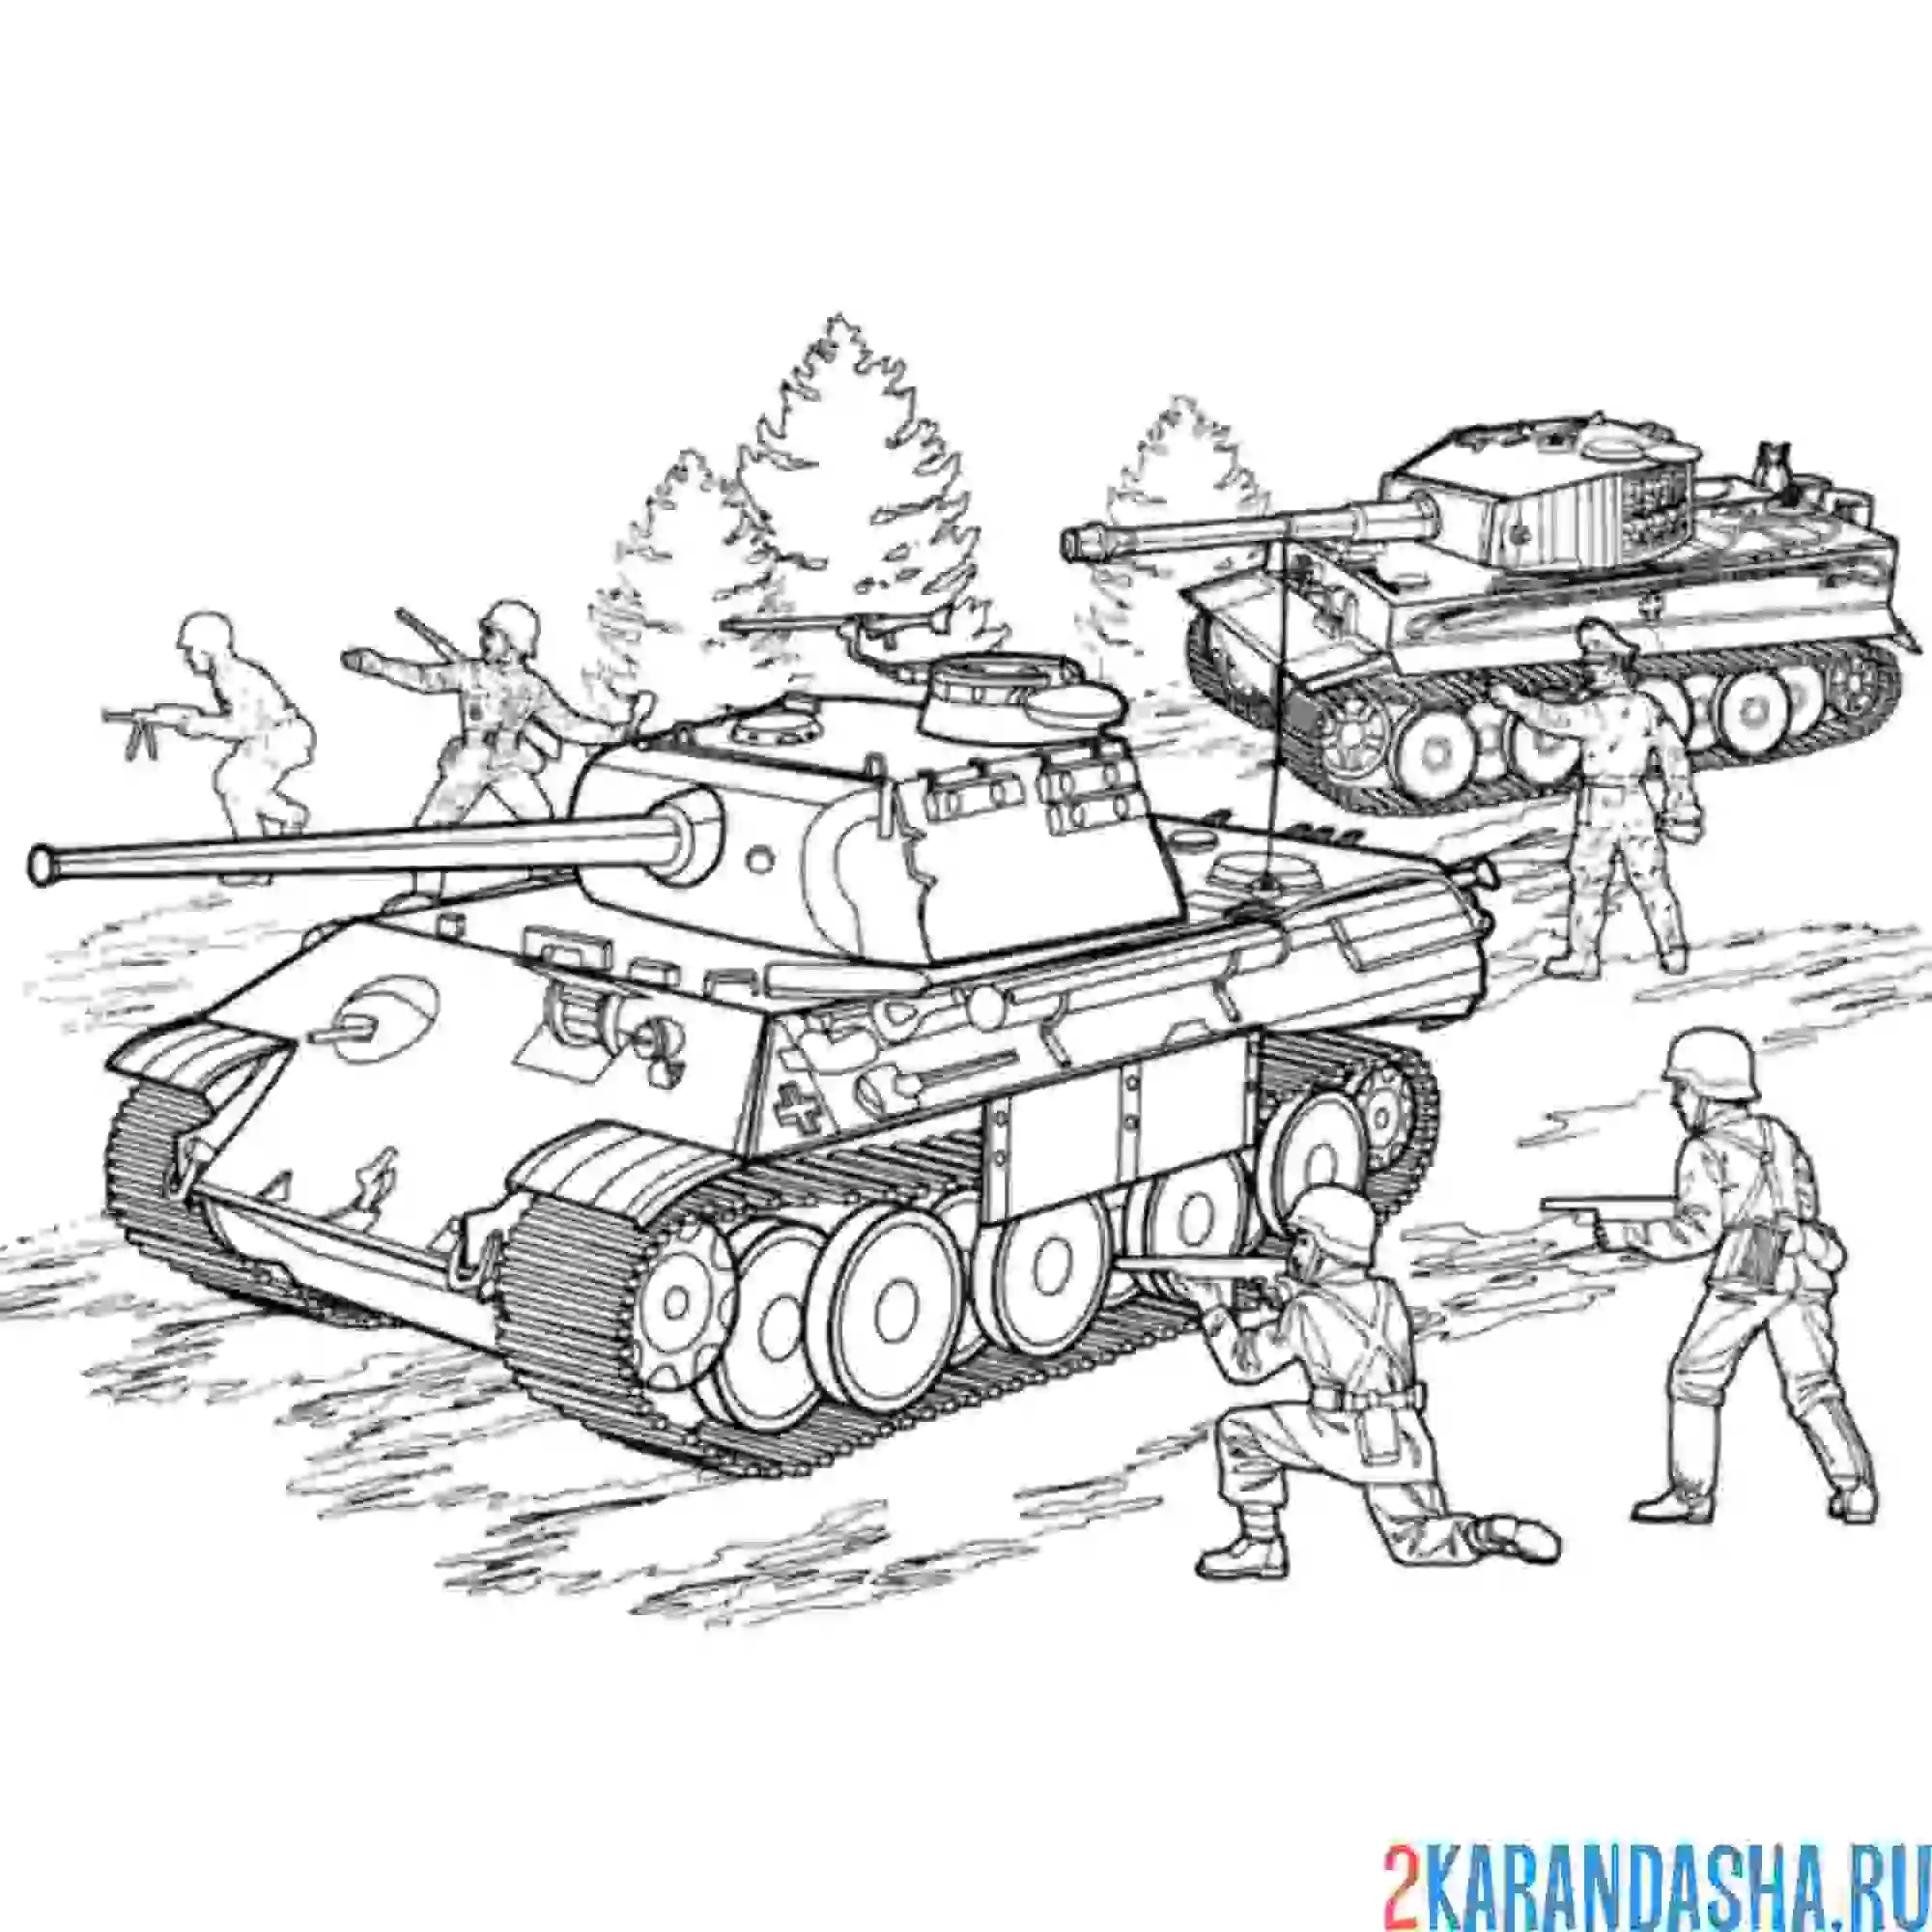 Раскраска 3 танка. Танк т-34 раскраска для детей. Раскраски танки ВОВ 1941-1945. Раскраска танка т34 на войне 1941-1945. Военный танк раскраска т34.